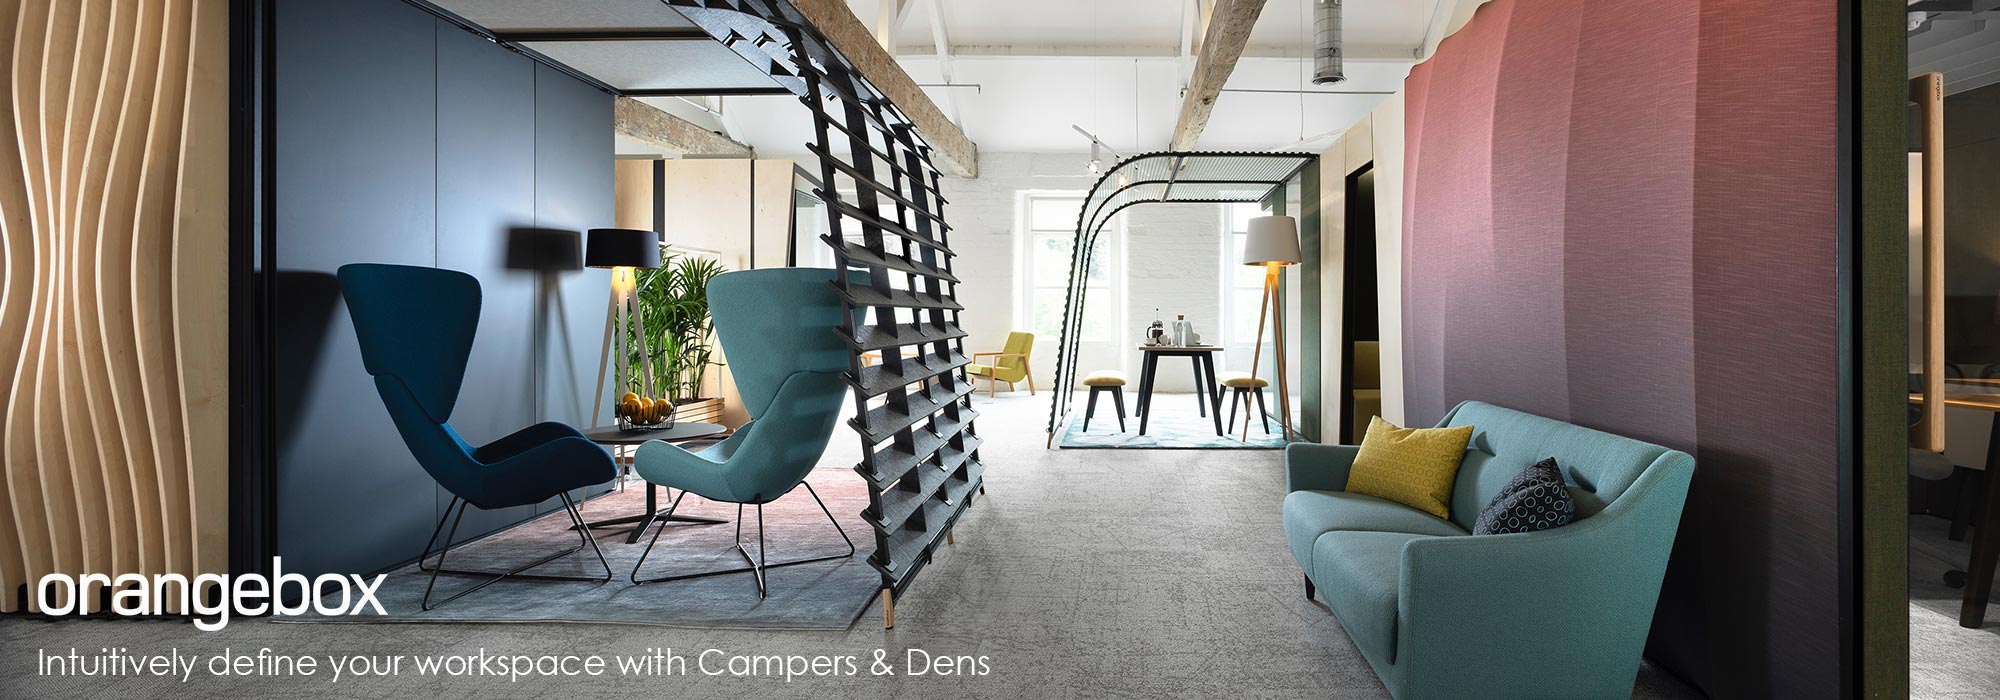 Orangebox Campers & Dens - Intuitively Define Your Workspace